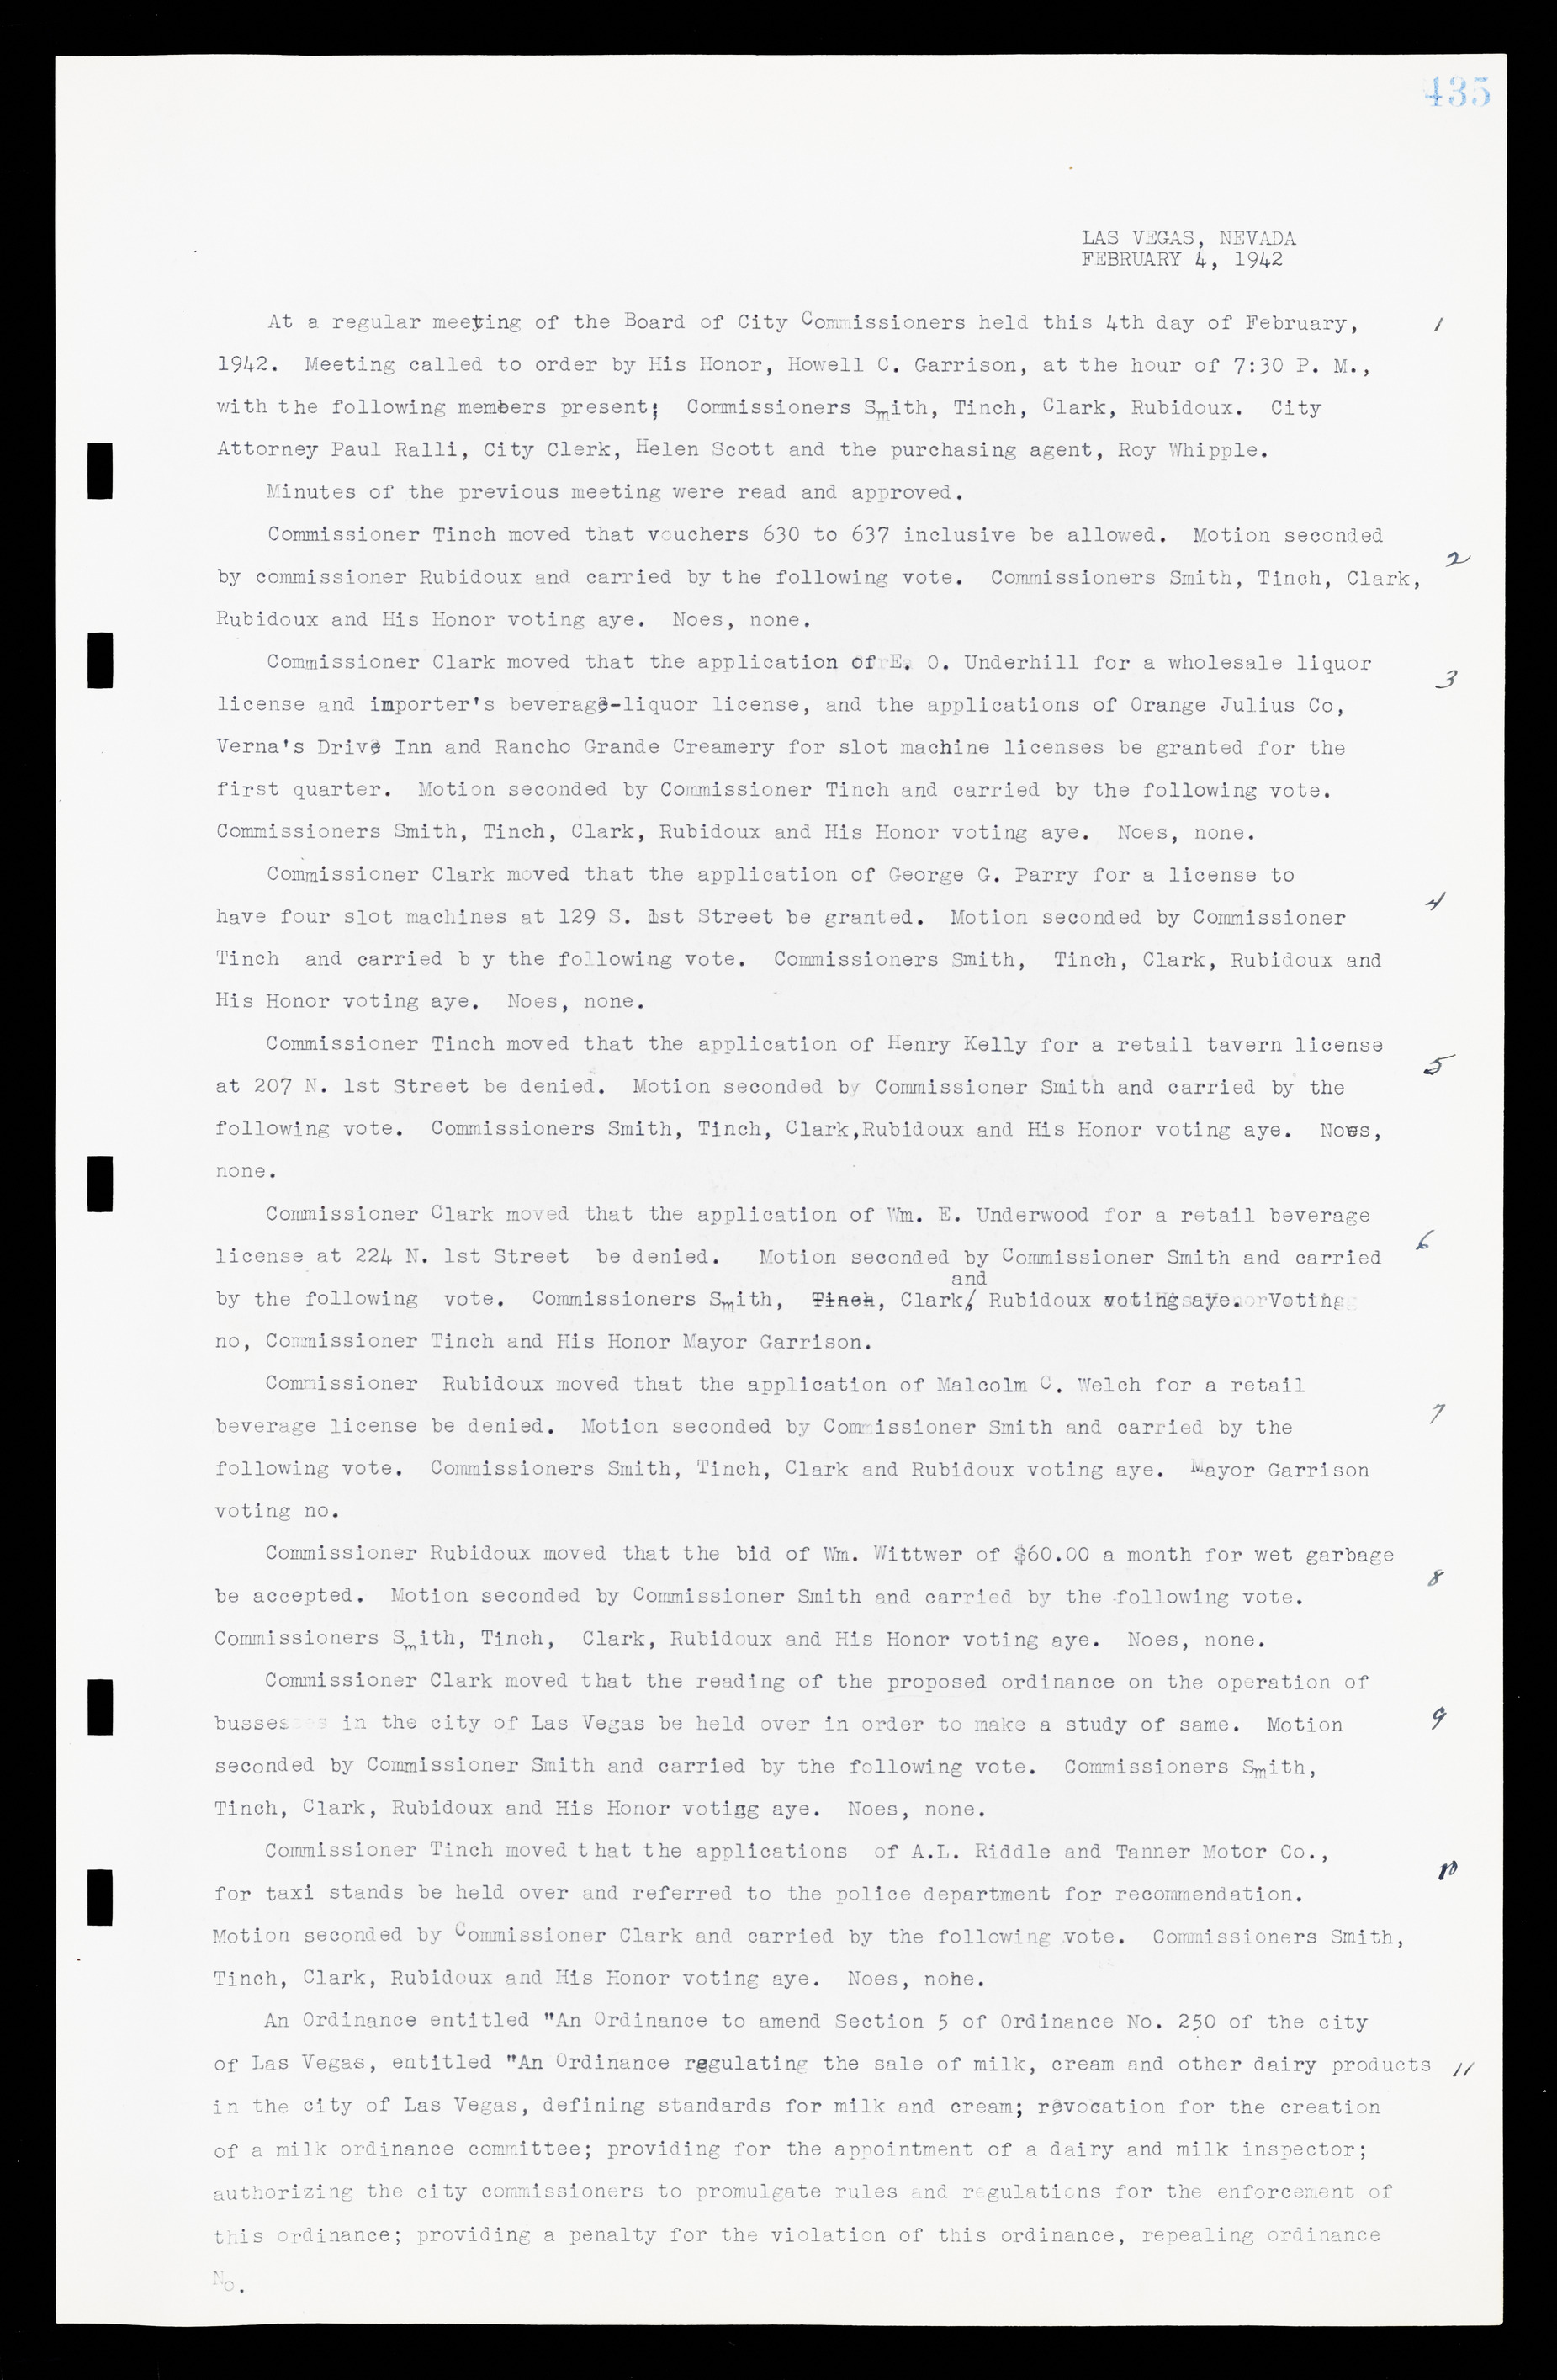 Las Vegas City Commission Minutes, February 17, 1937 to August 4, 1942, lvc000004-463